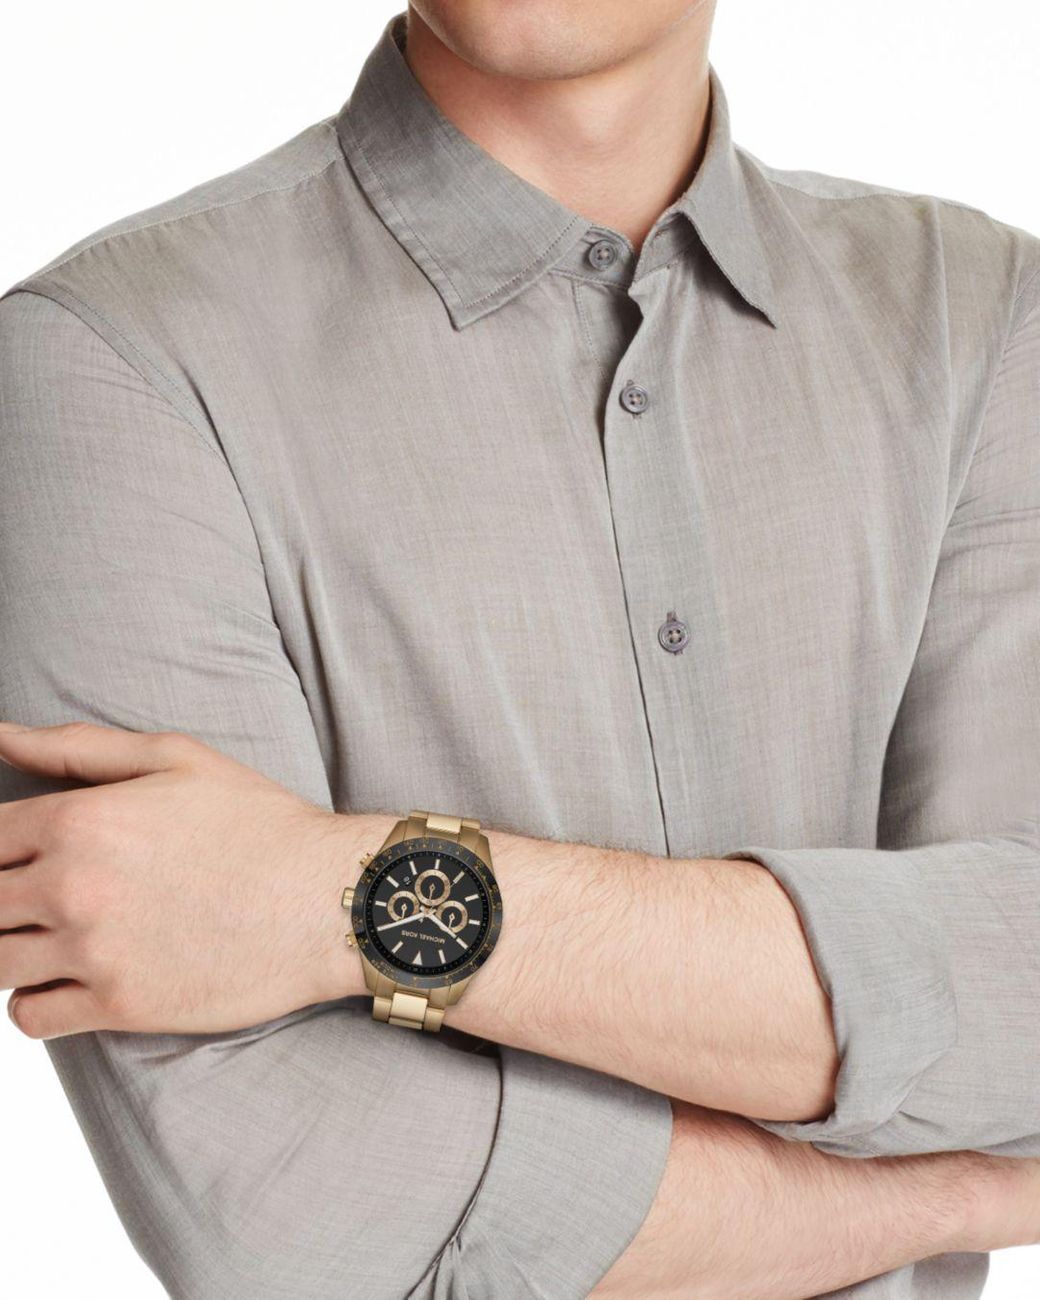 Michael Kors Layton Antique Gold-tone Watch in Black/Gold (Metallic) for Men - Save 9% - Lyst